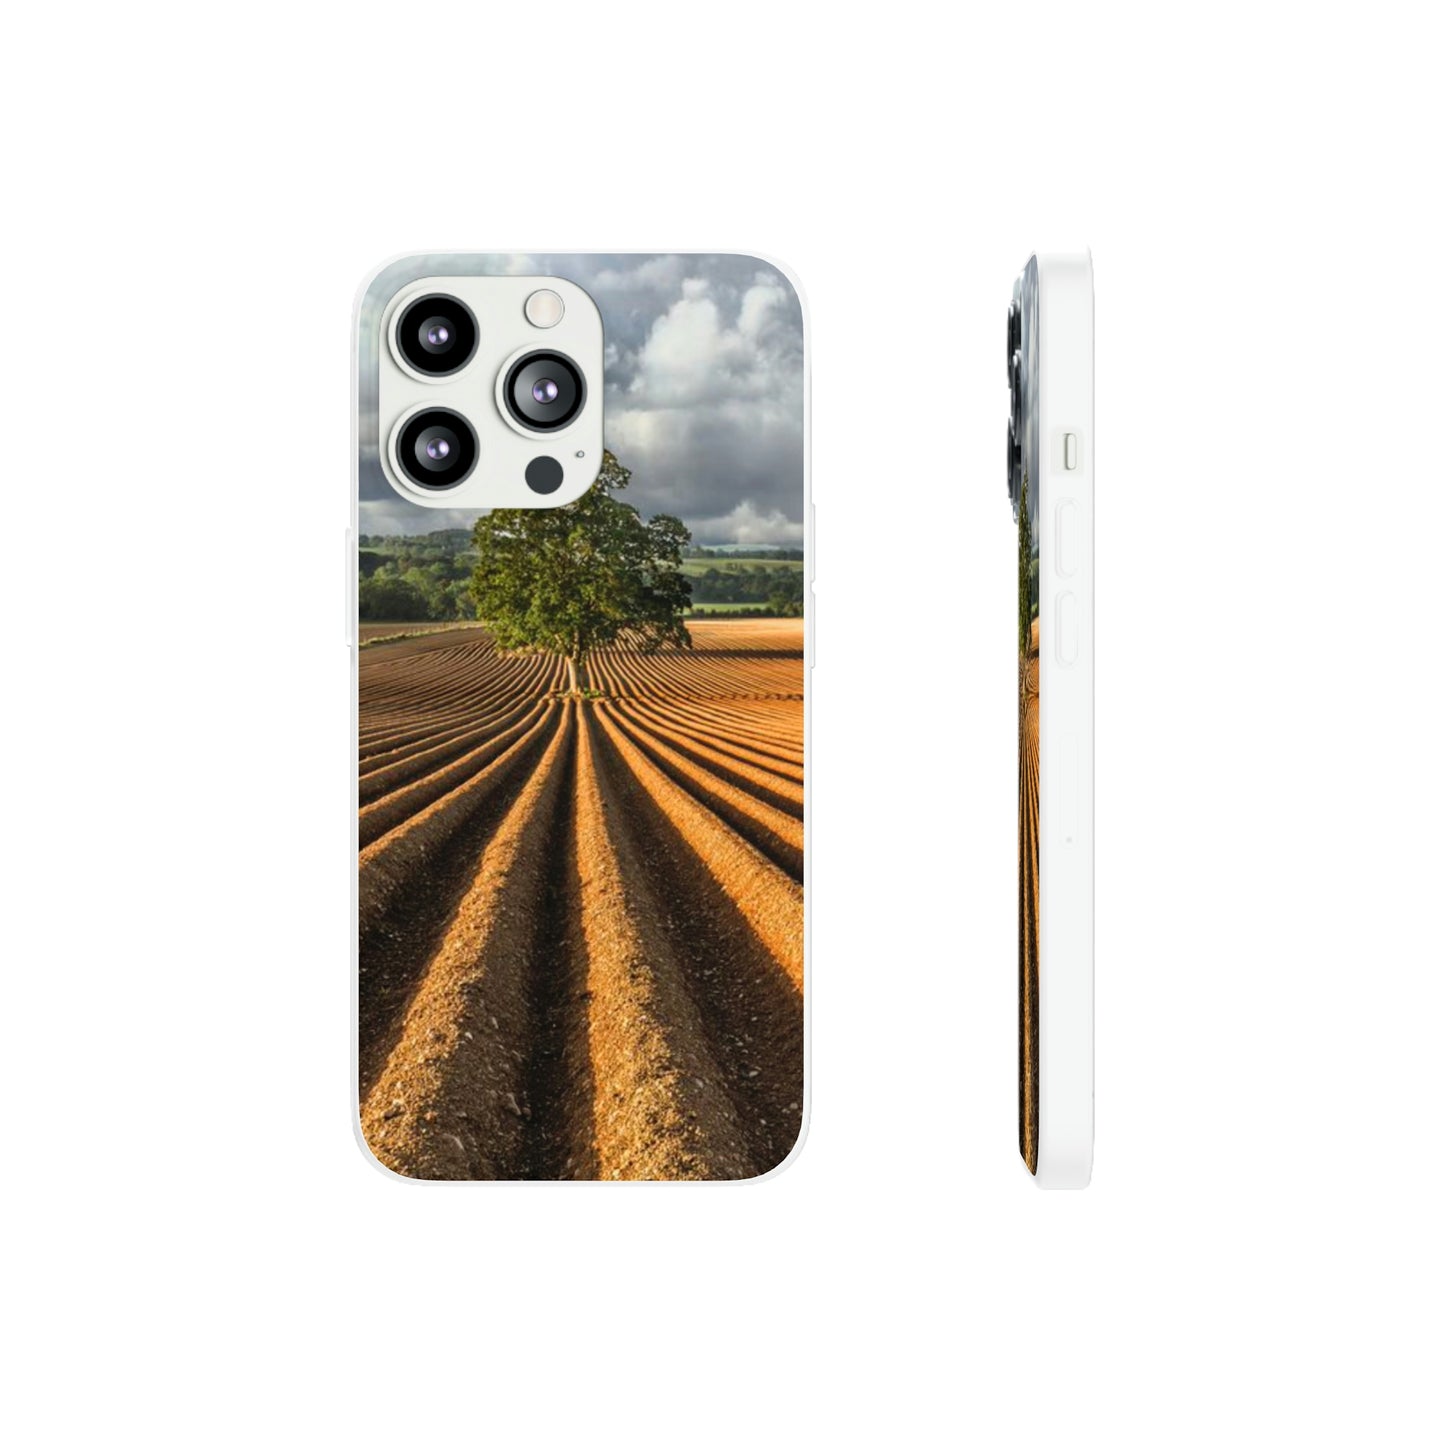 Living Farm - iPhone